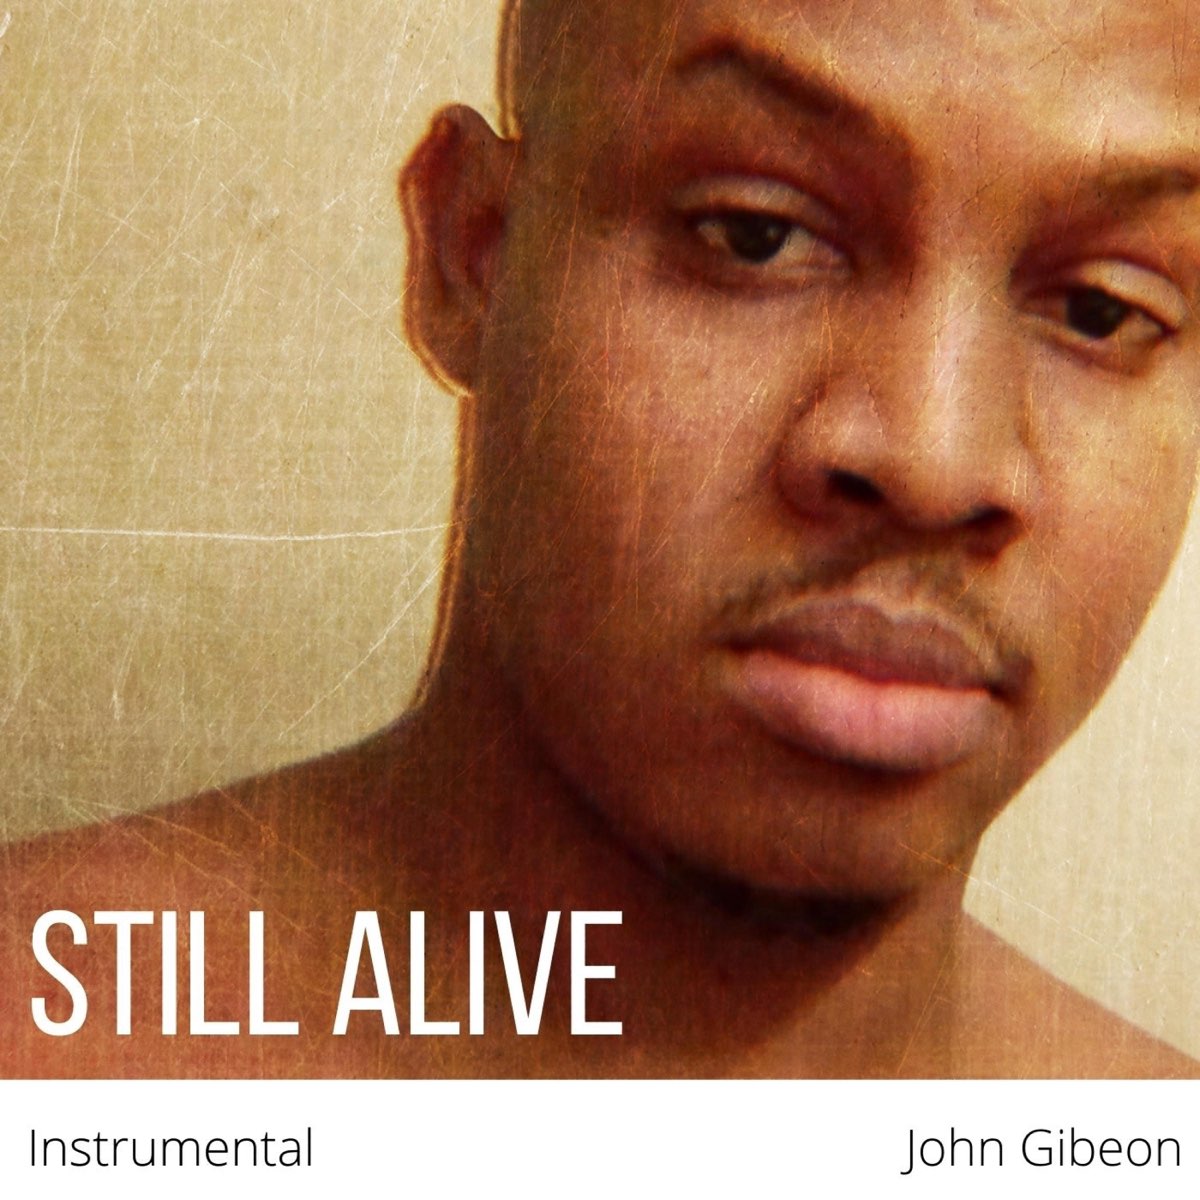 Still Alive (Instrumental) - Single by John Gibeon on Apple Music